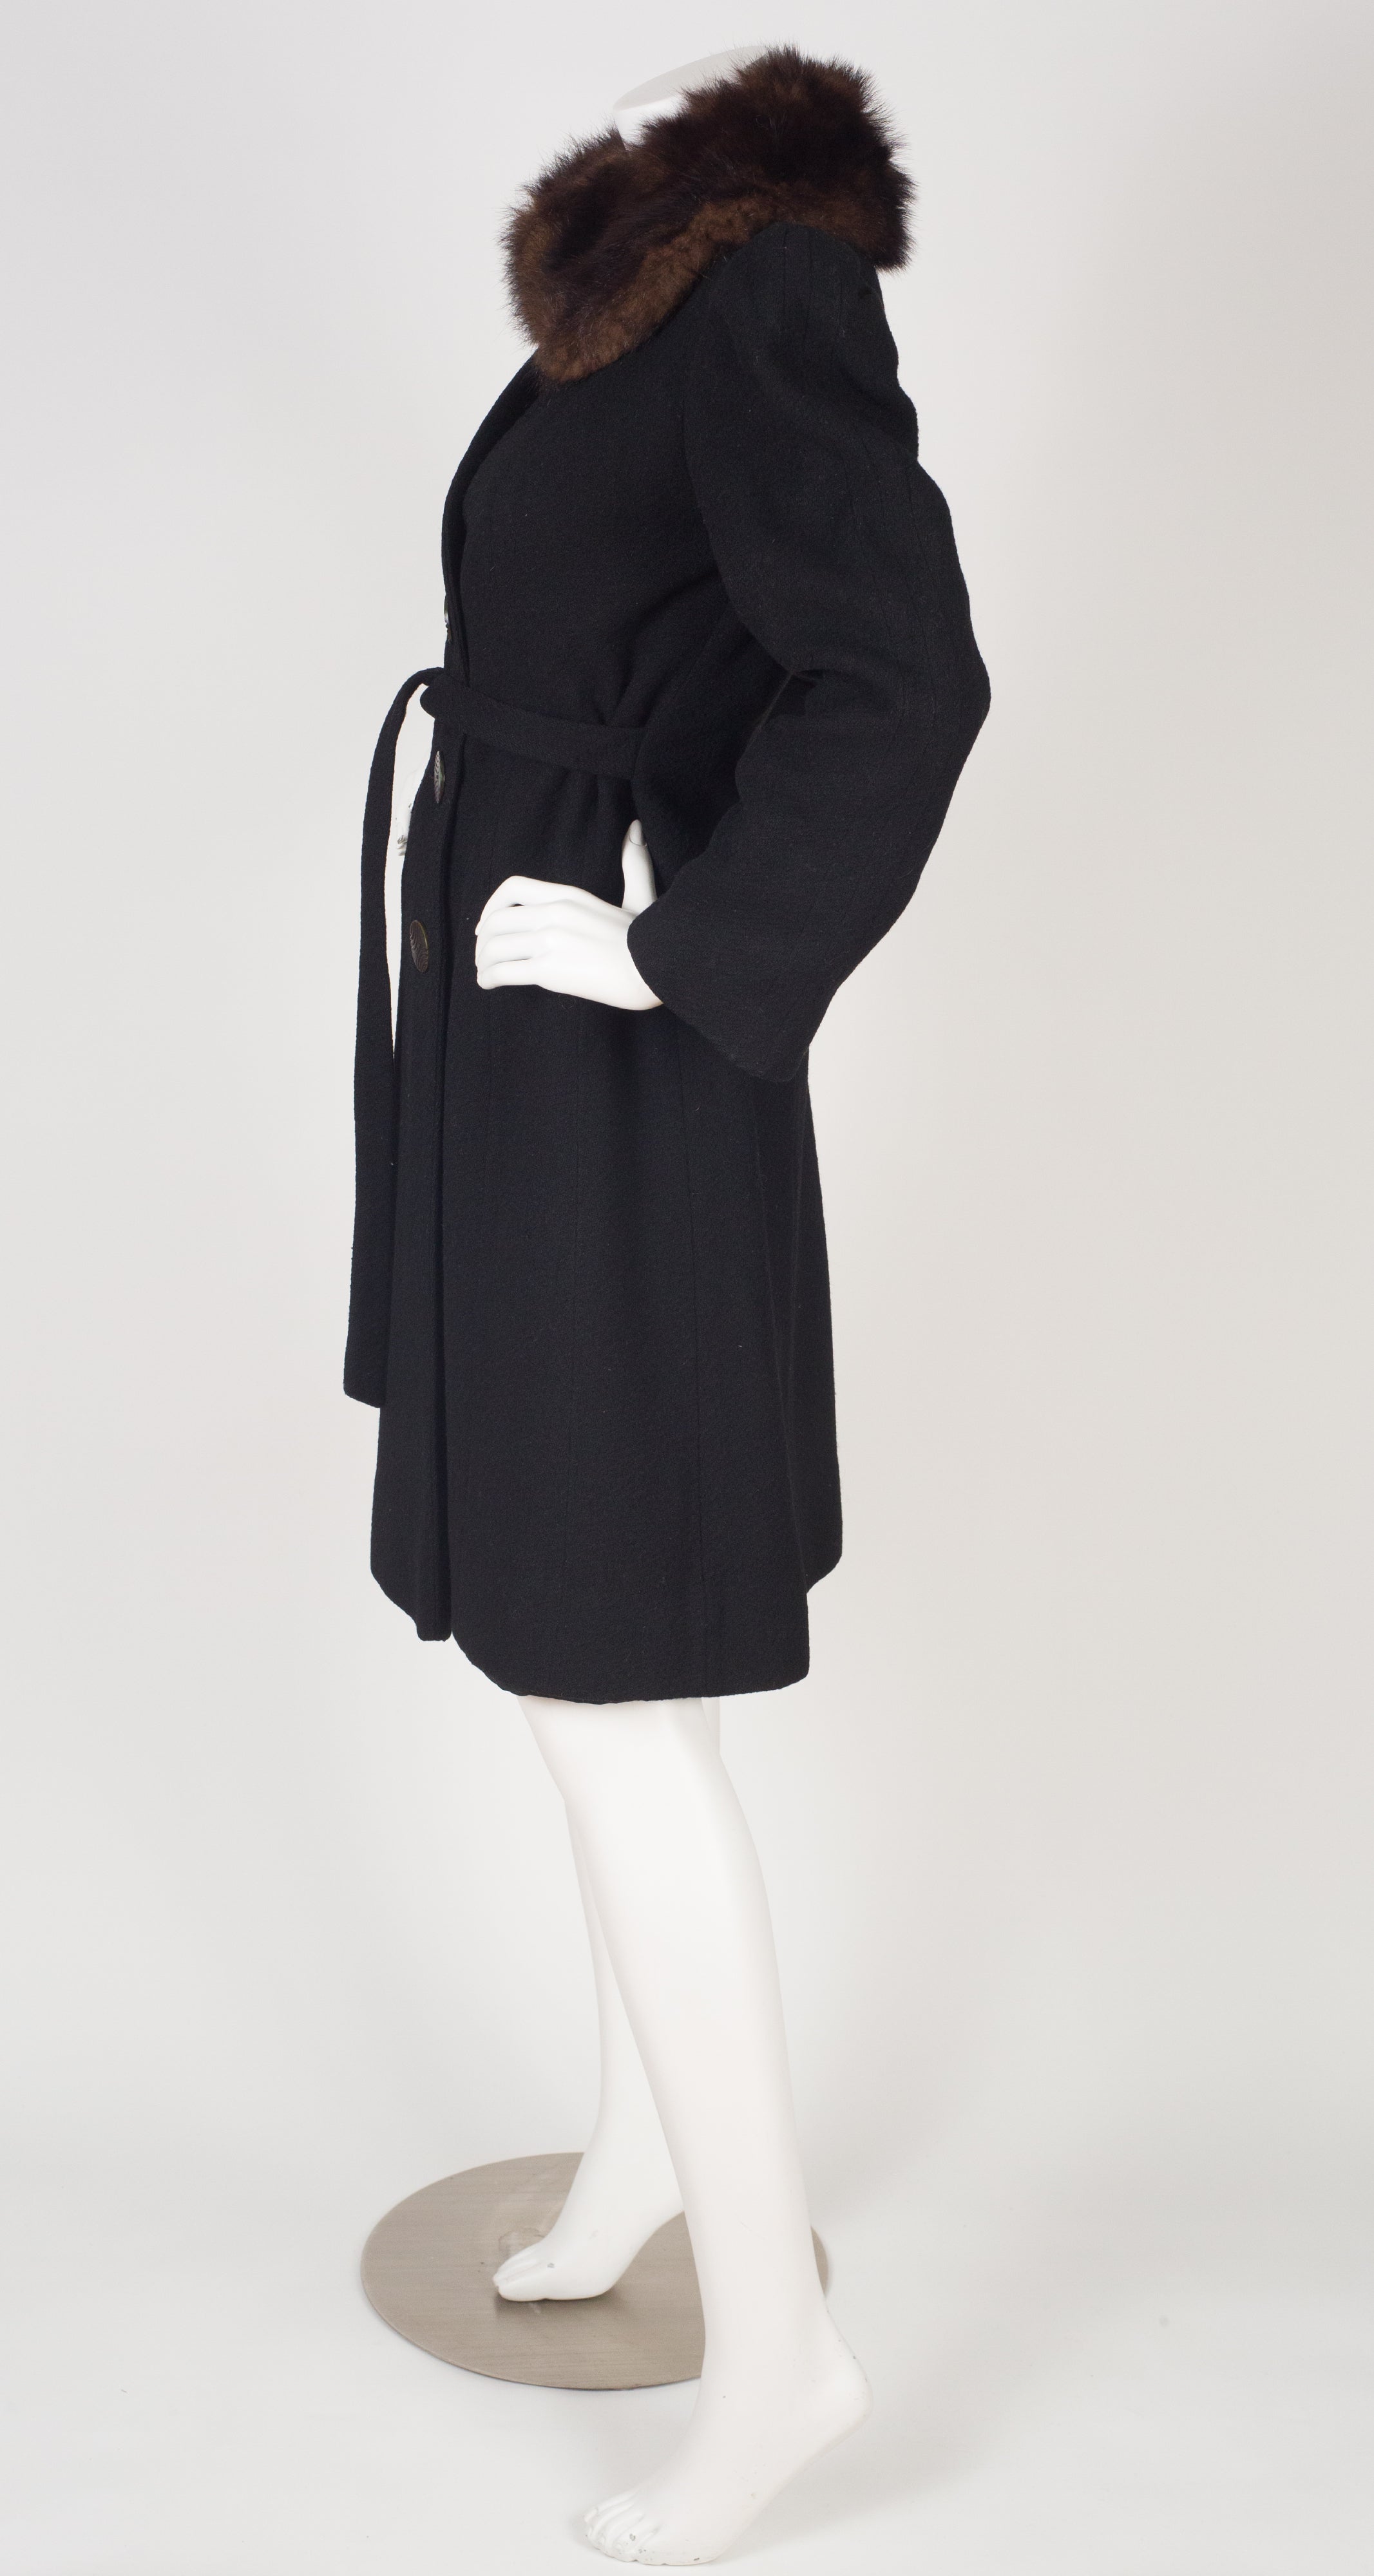 1930s Art Deco Black Wool Fur Collar Coat